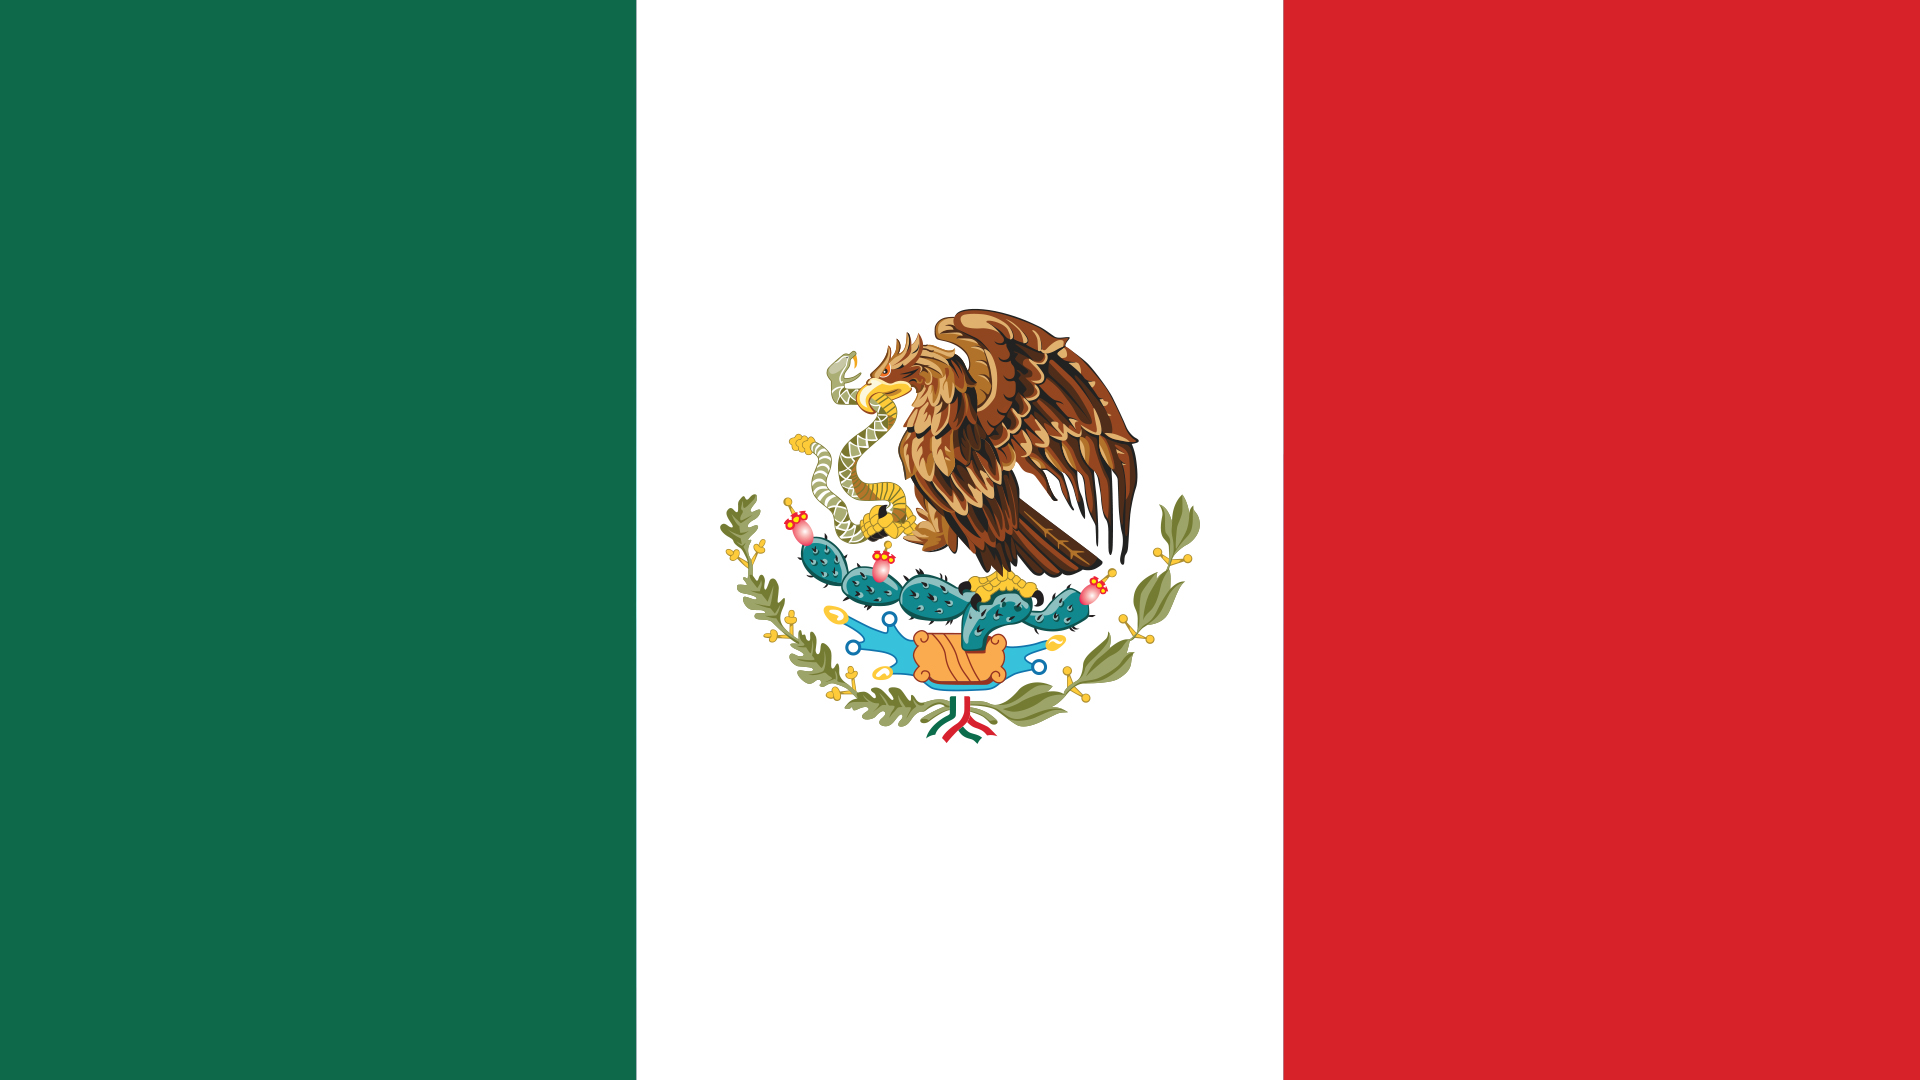 The Mexico flag